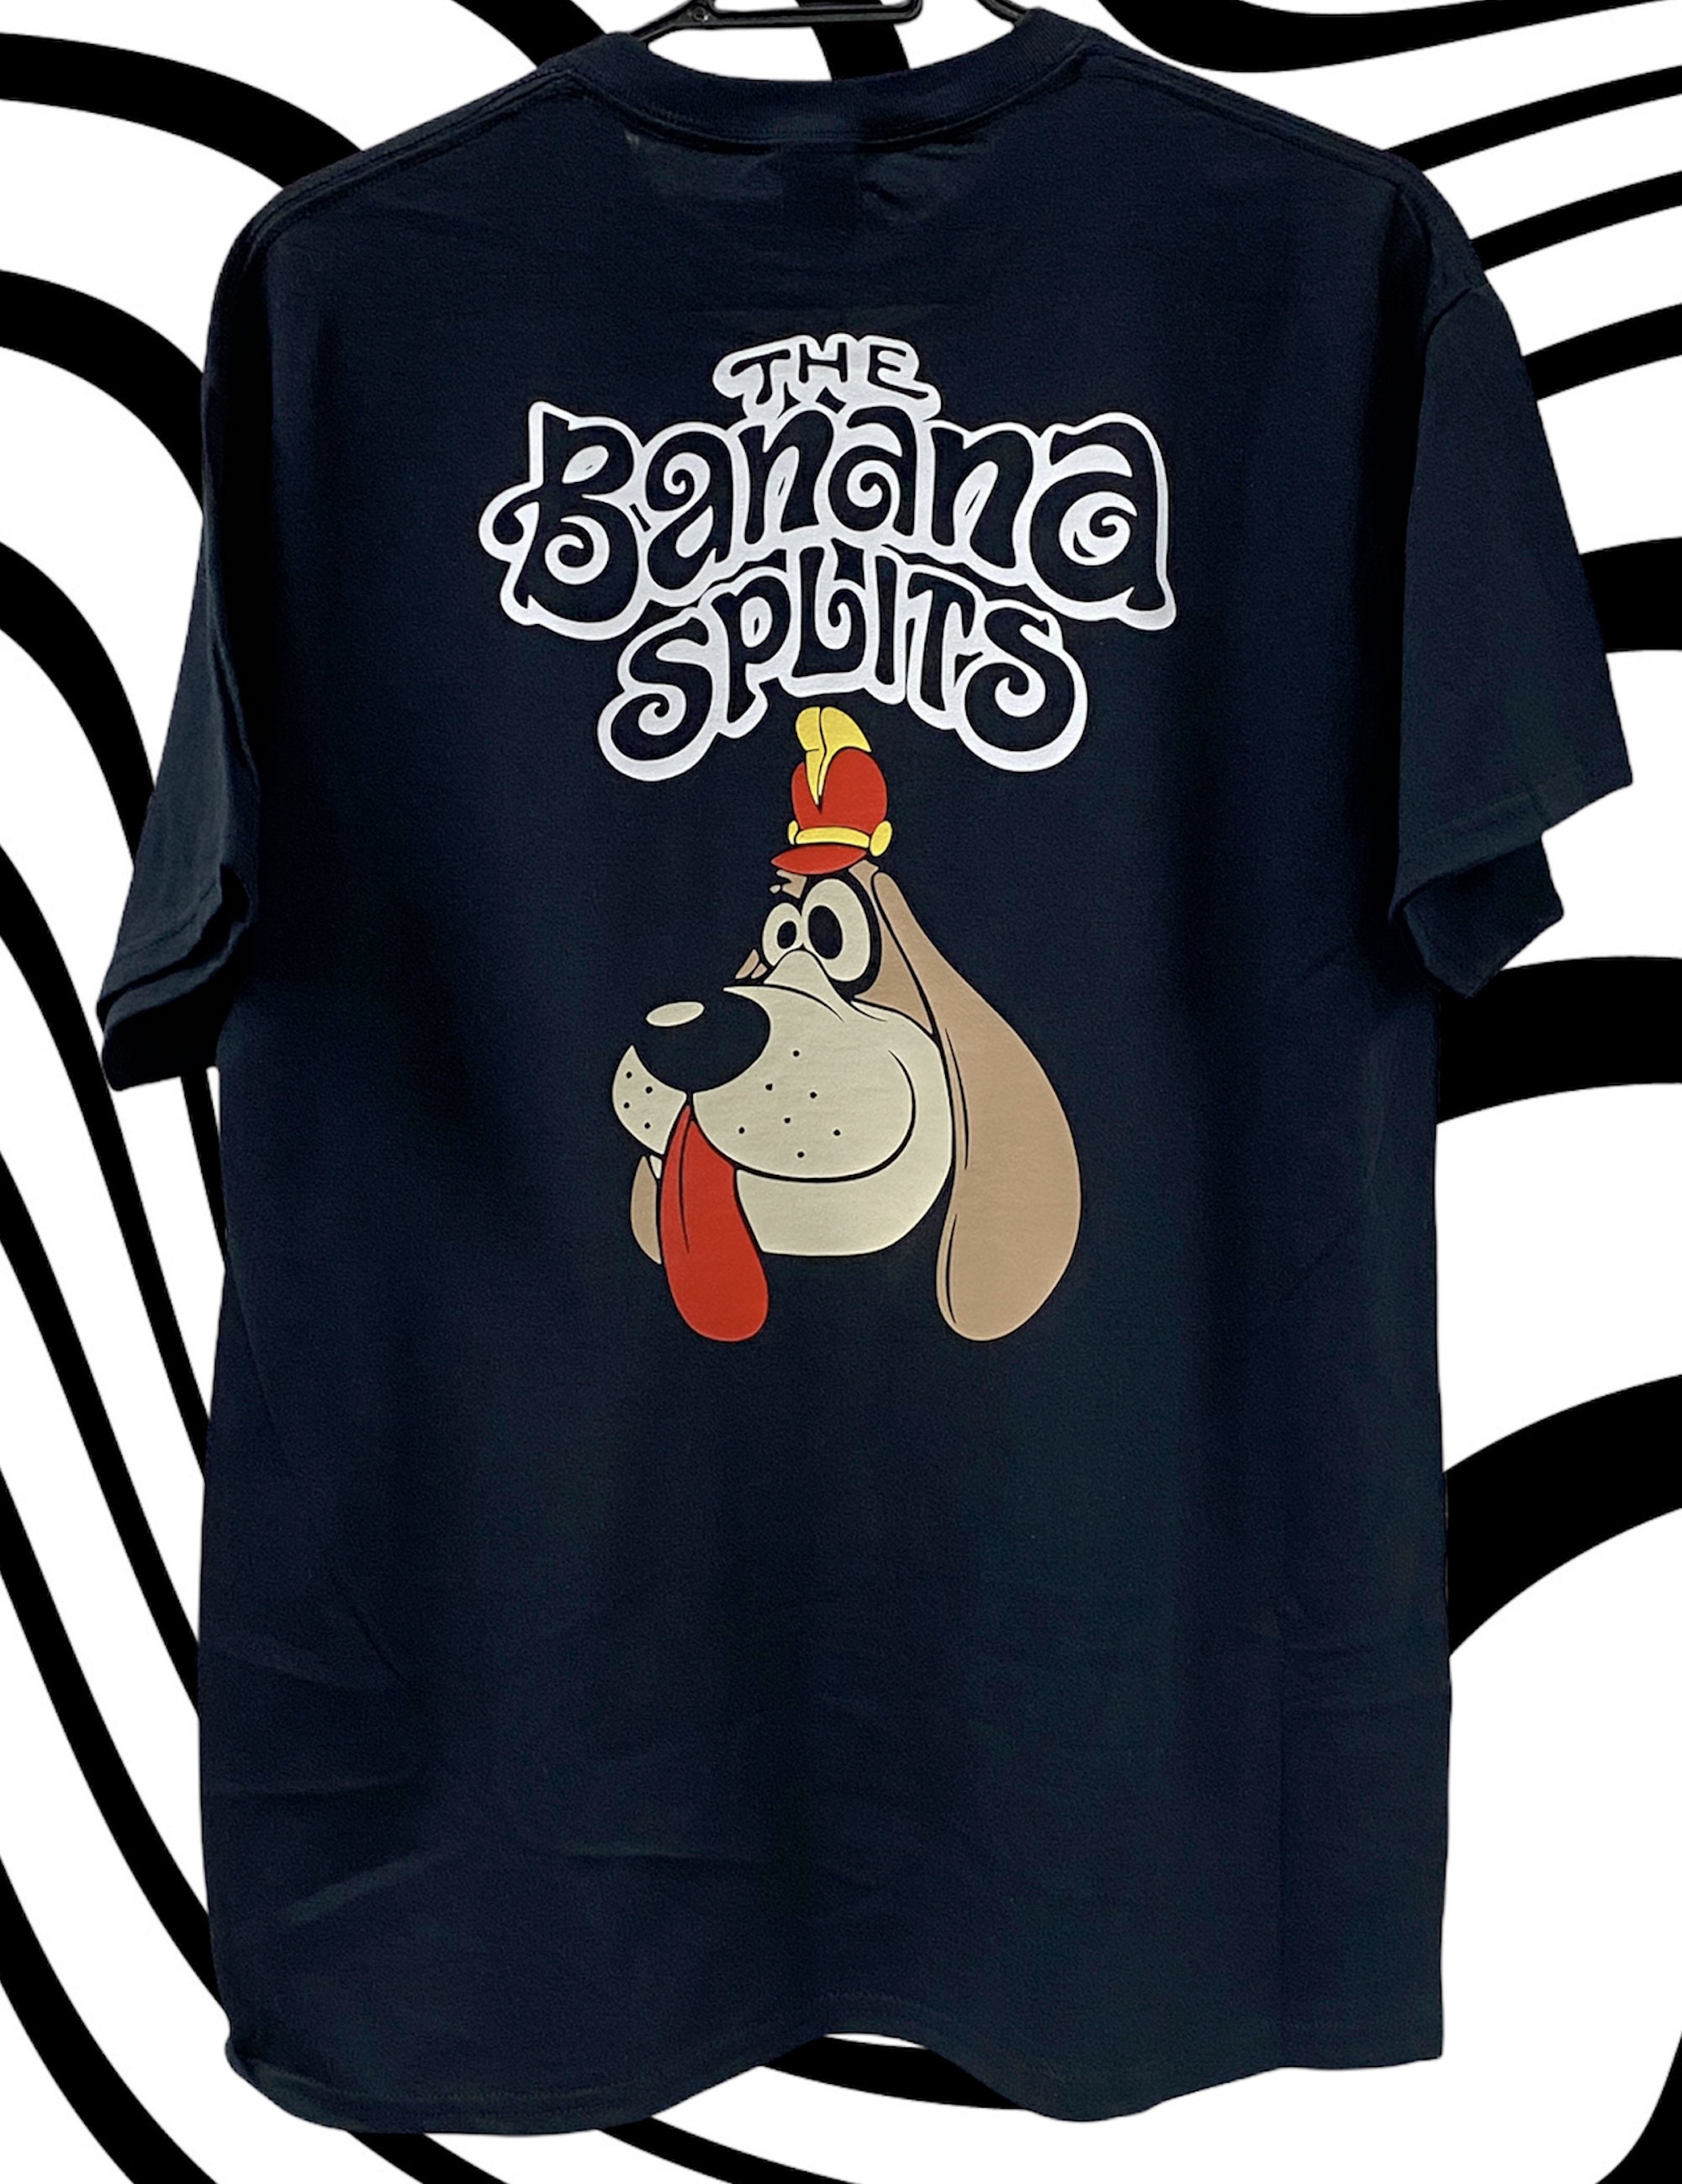 Retro Style Banana Splits Fleagle the Beagle T shirt.